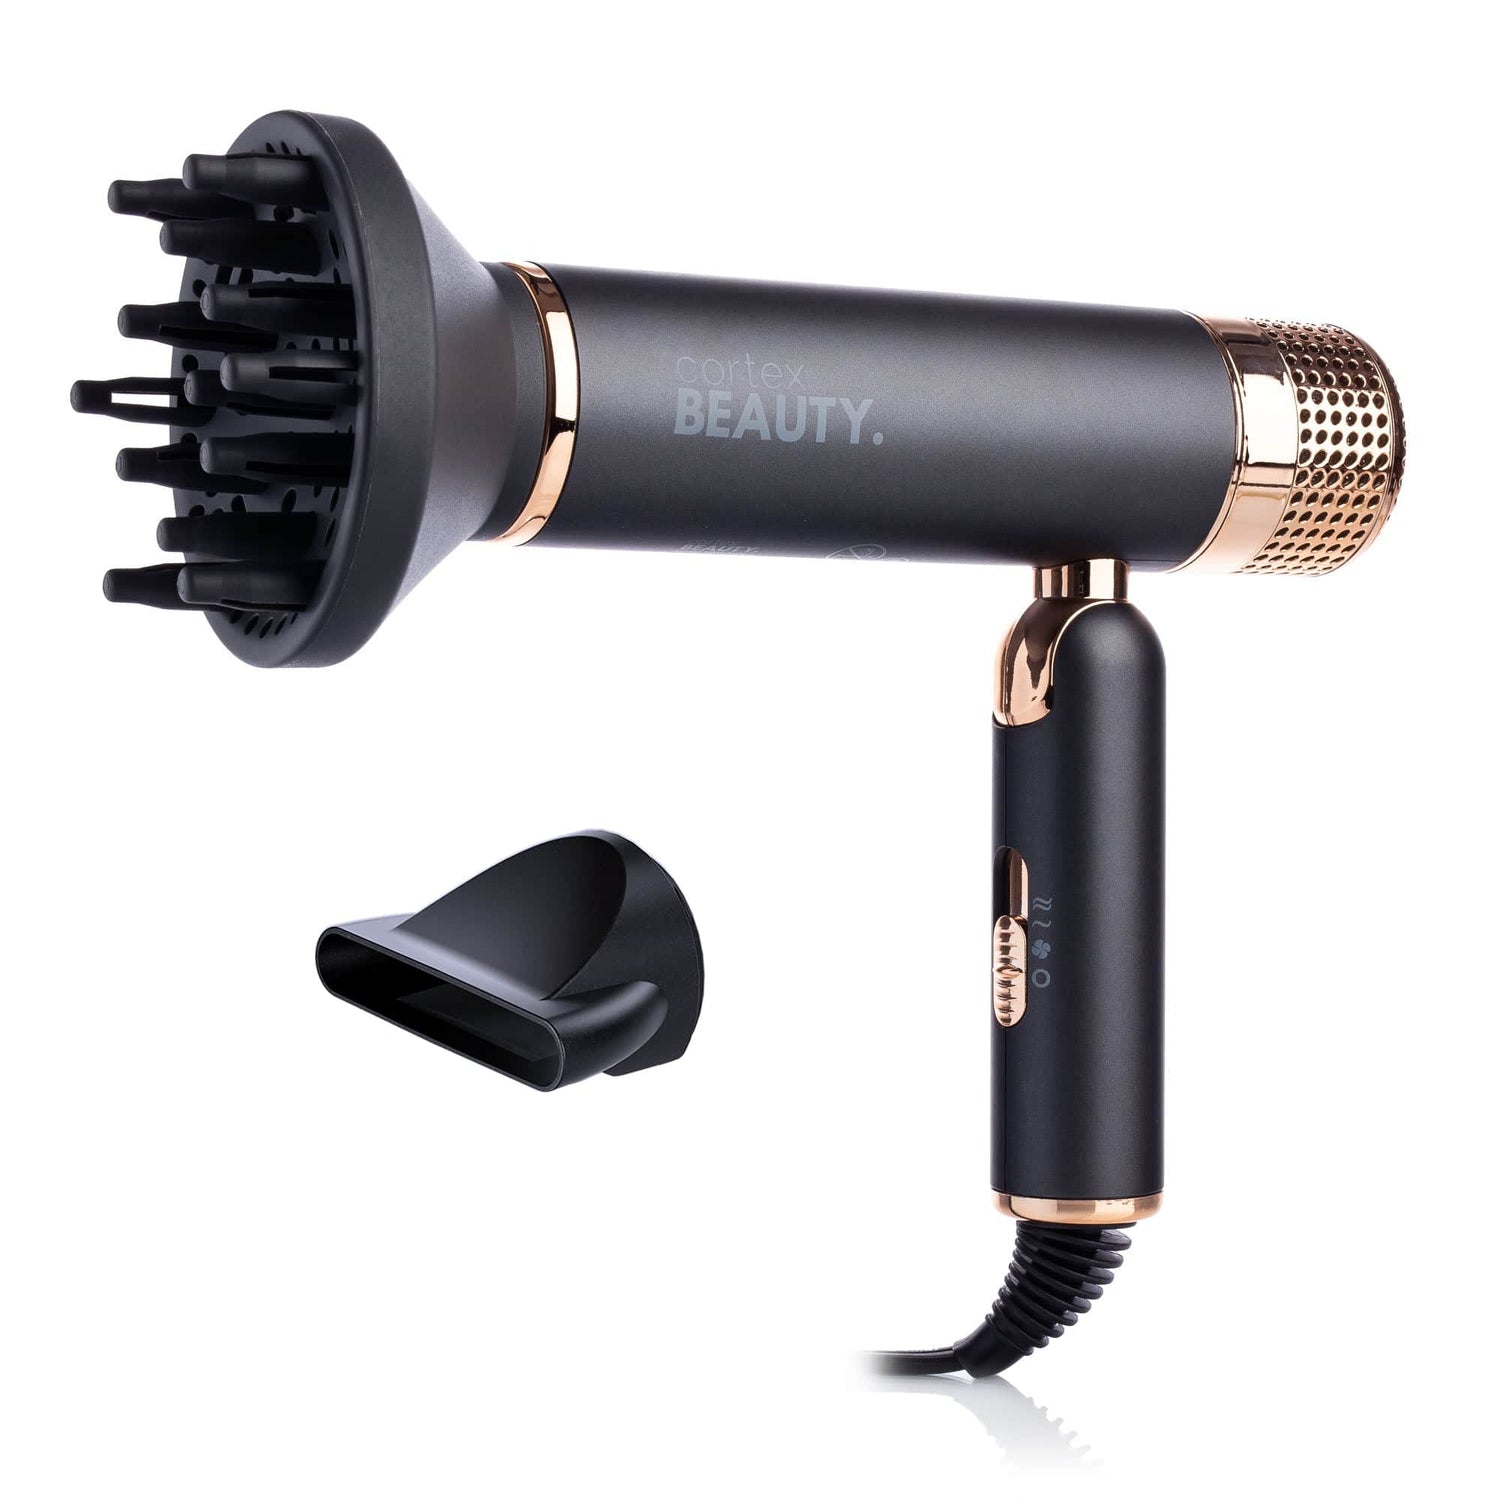 Cortex Beauty Titanium/Rosegold SlimLiner : Turbo-Charged Foldable Hair Dryer